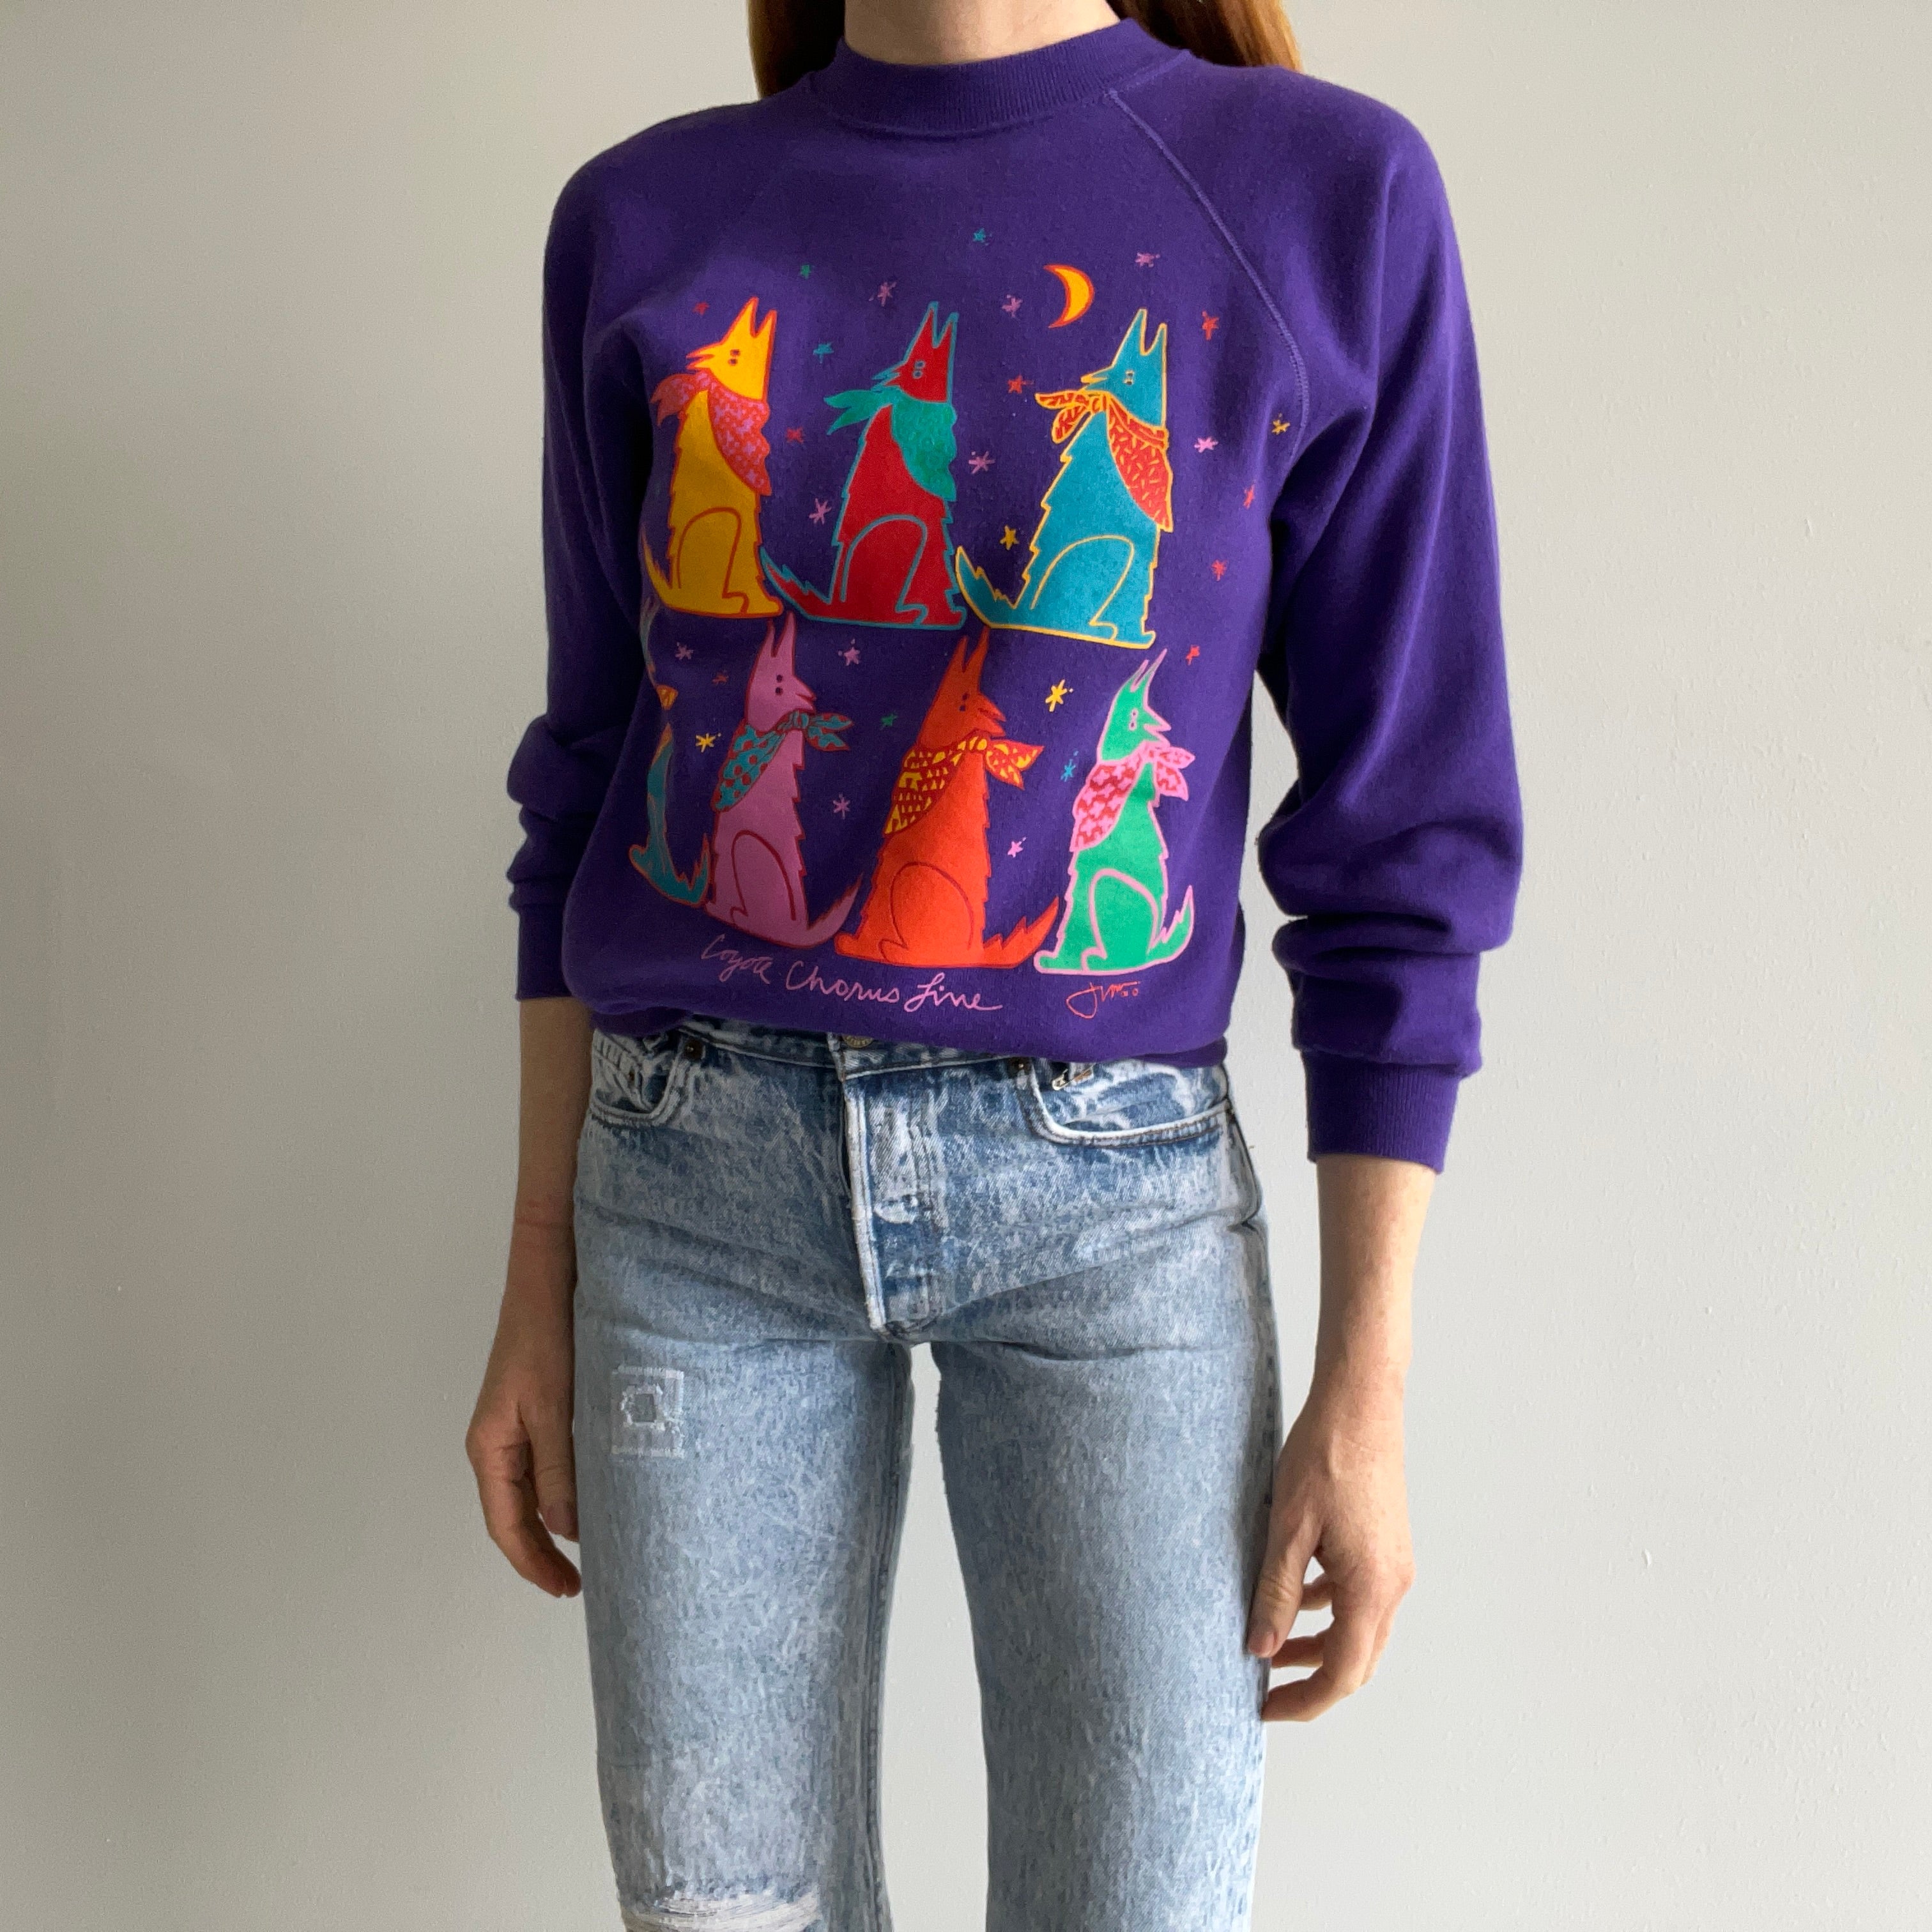 1980s Coyote Chorus Line Sweatshirt